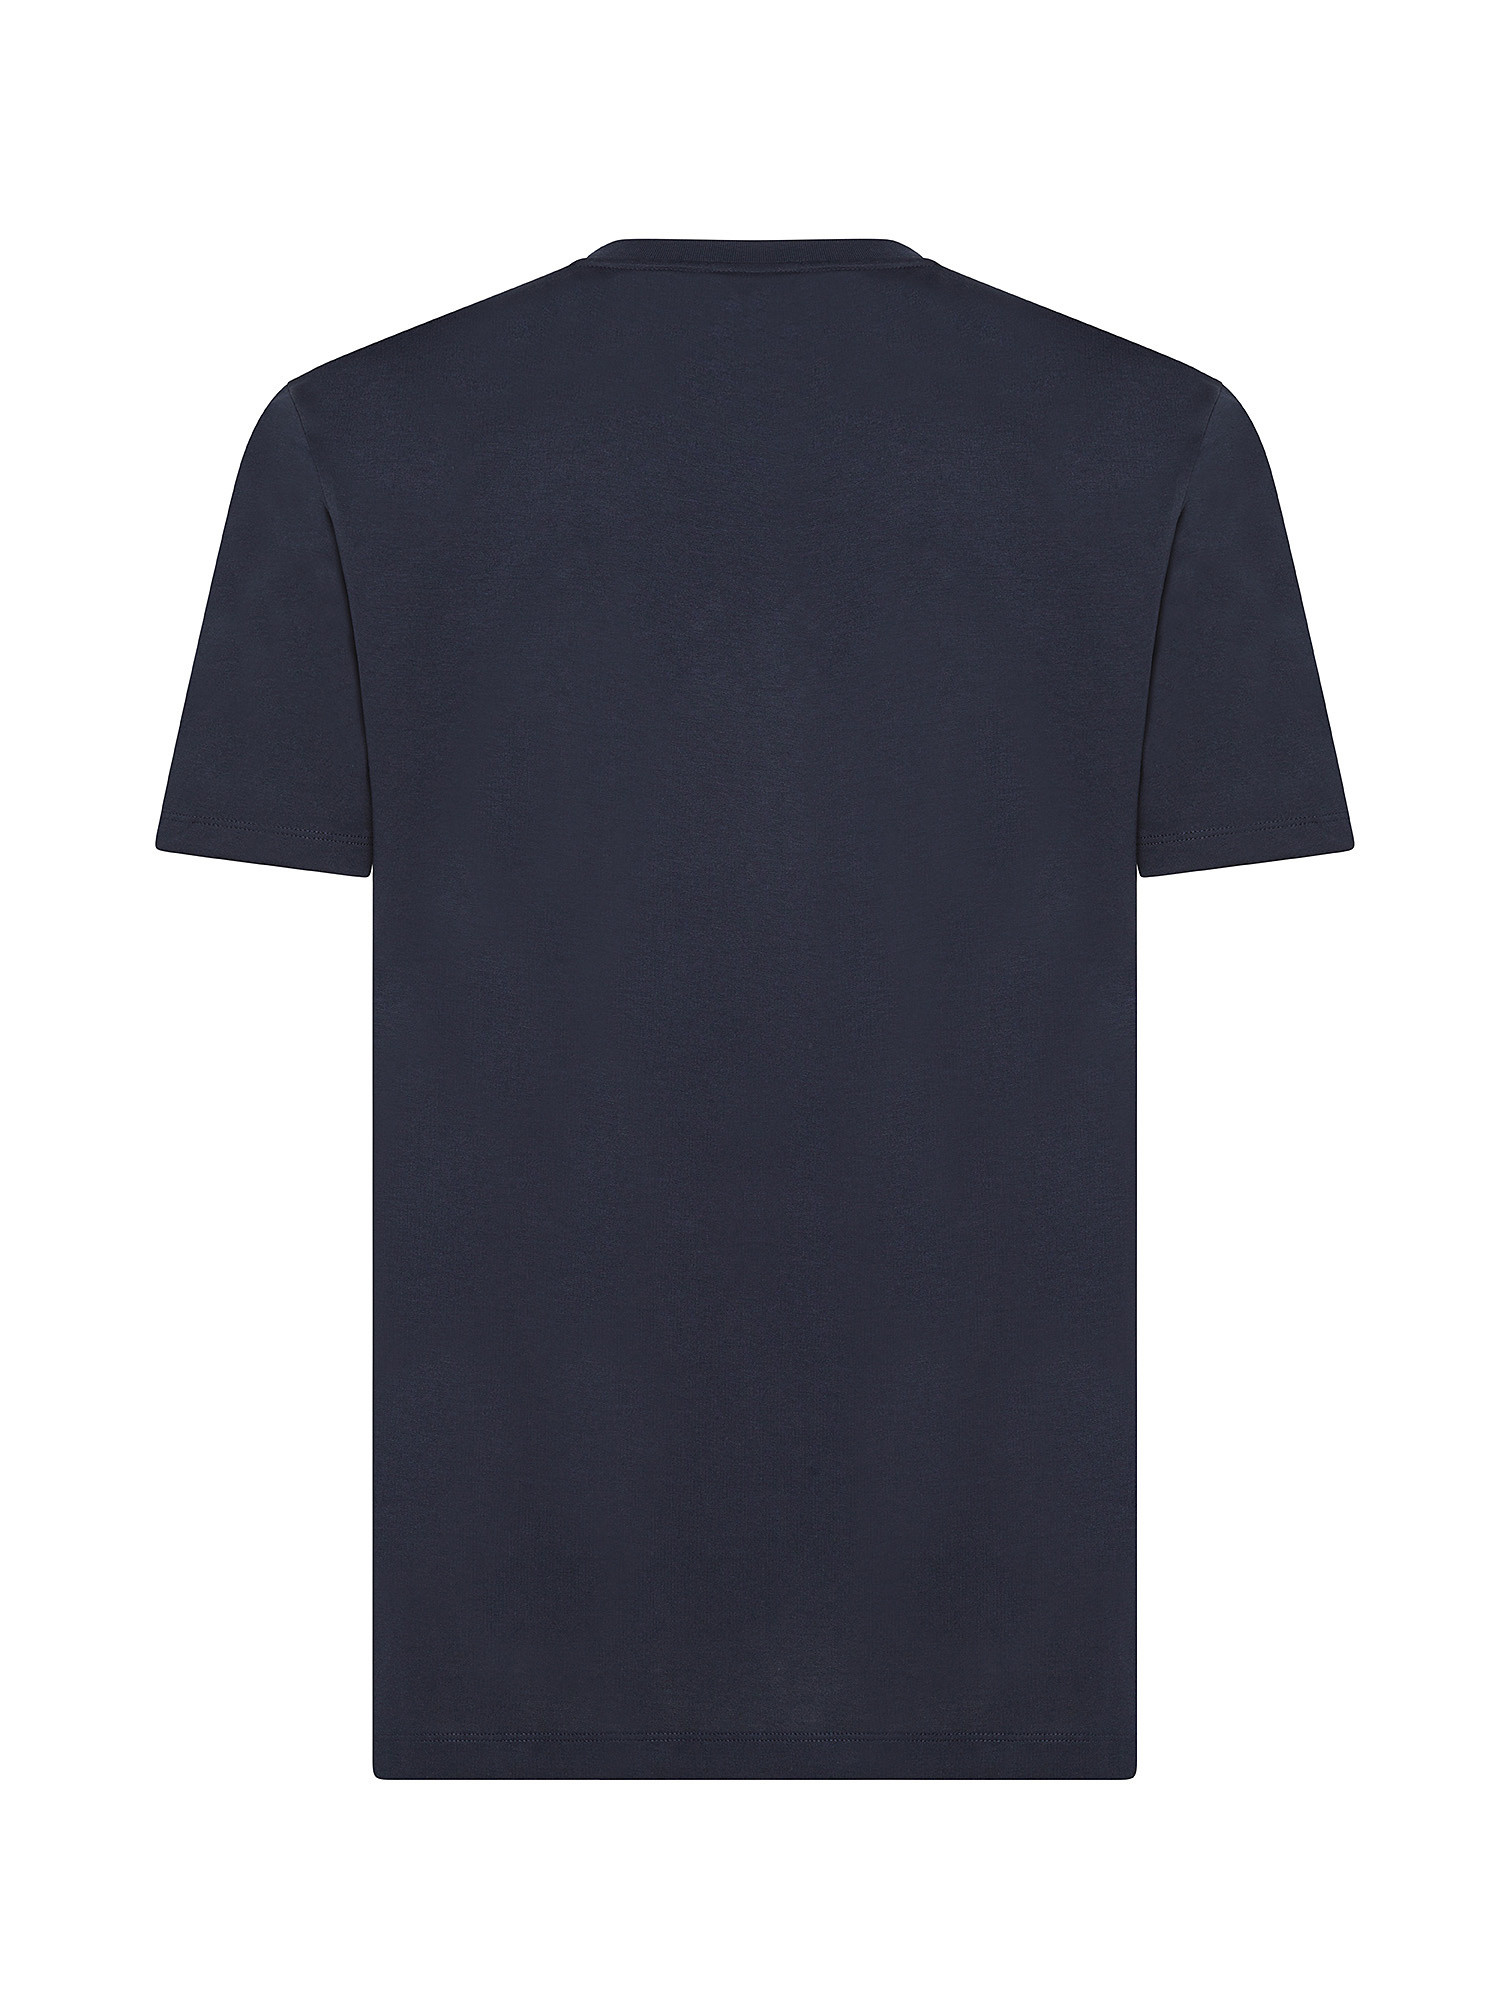 Hugo - T-shirt in cotone biologico con logo stampato, Blu scuro, large image number 1